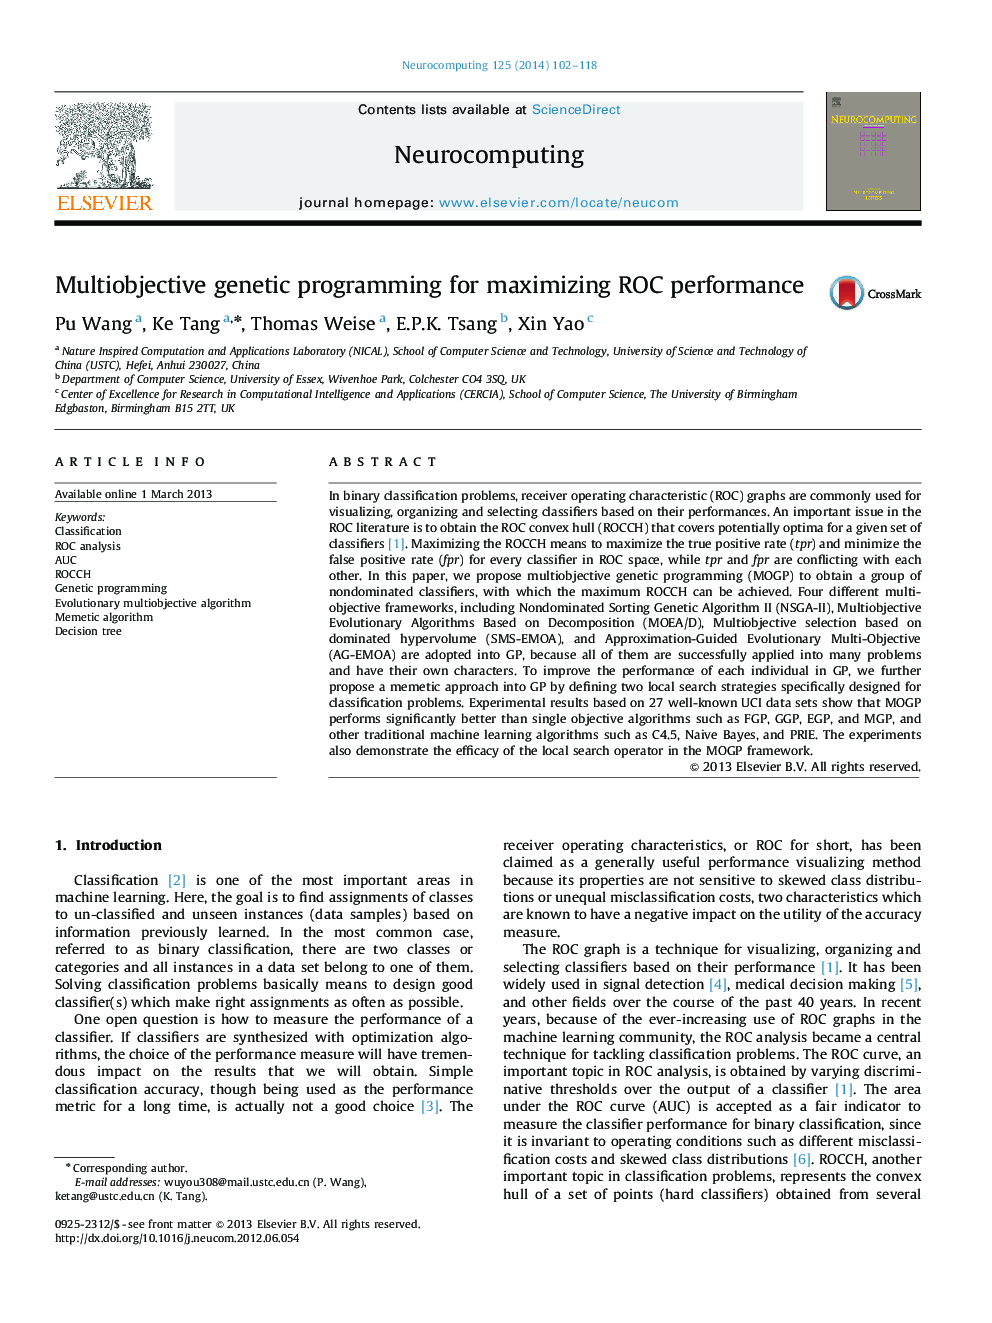 Multiobjective genetic programming for maximizing ROC performance